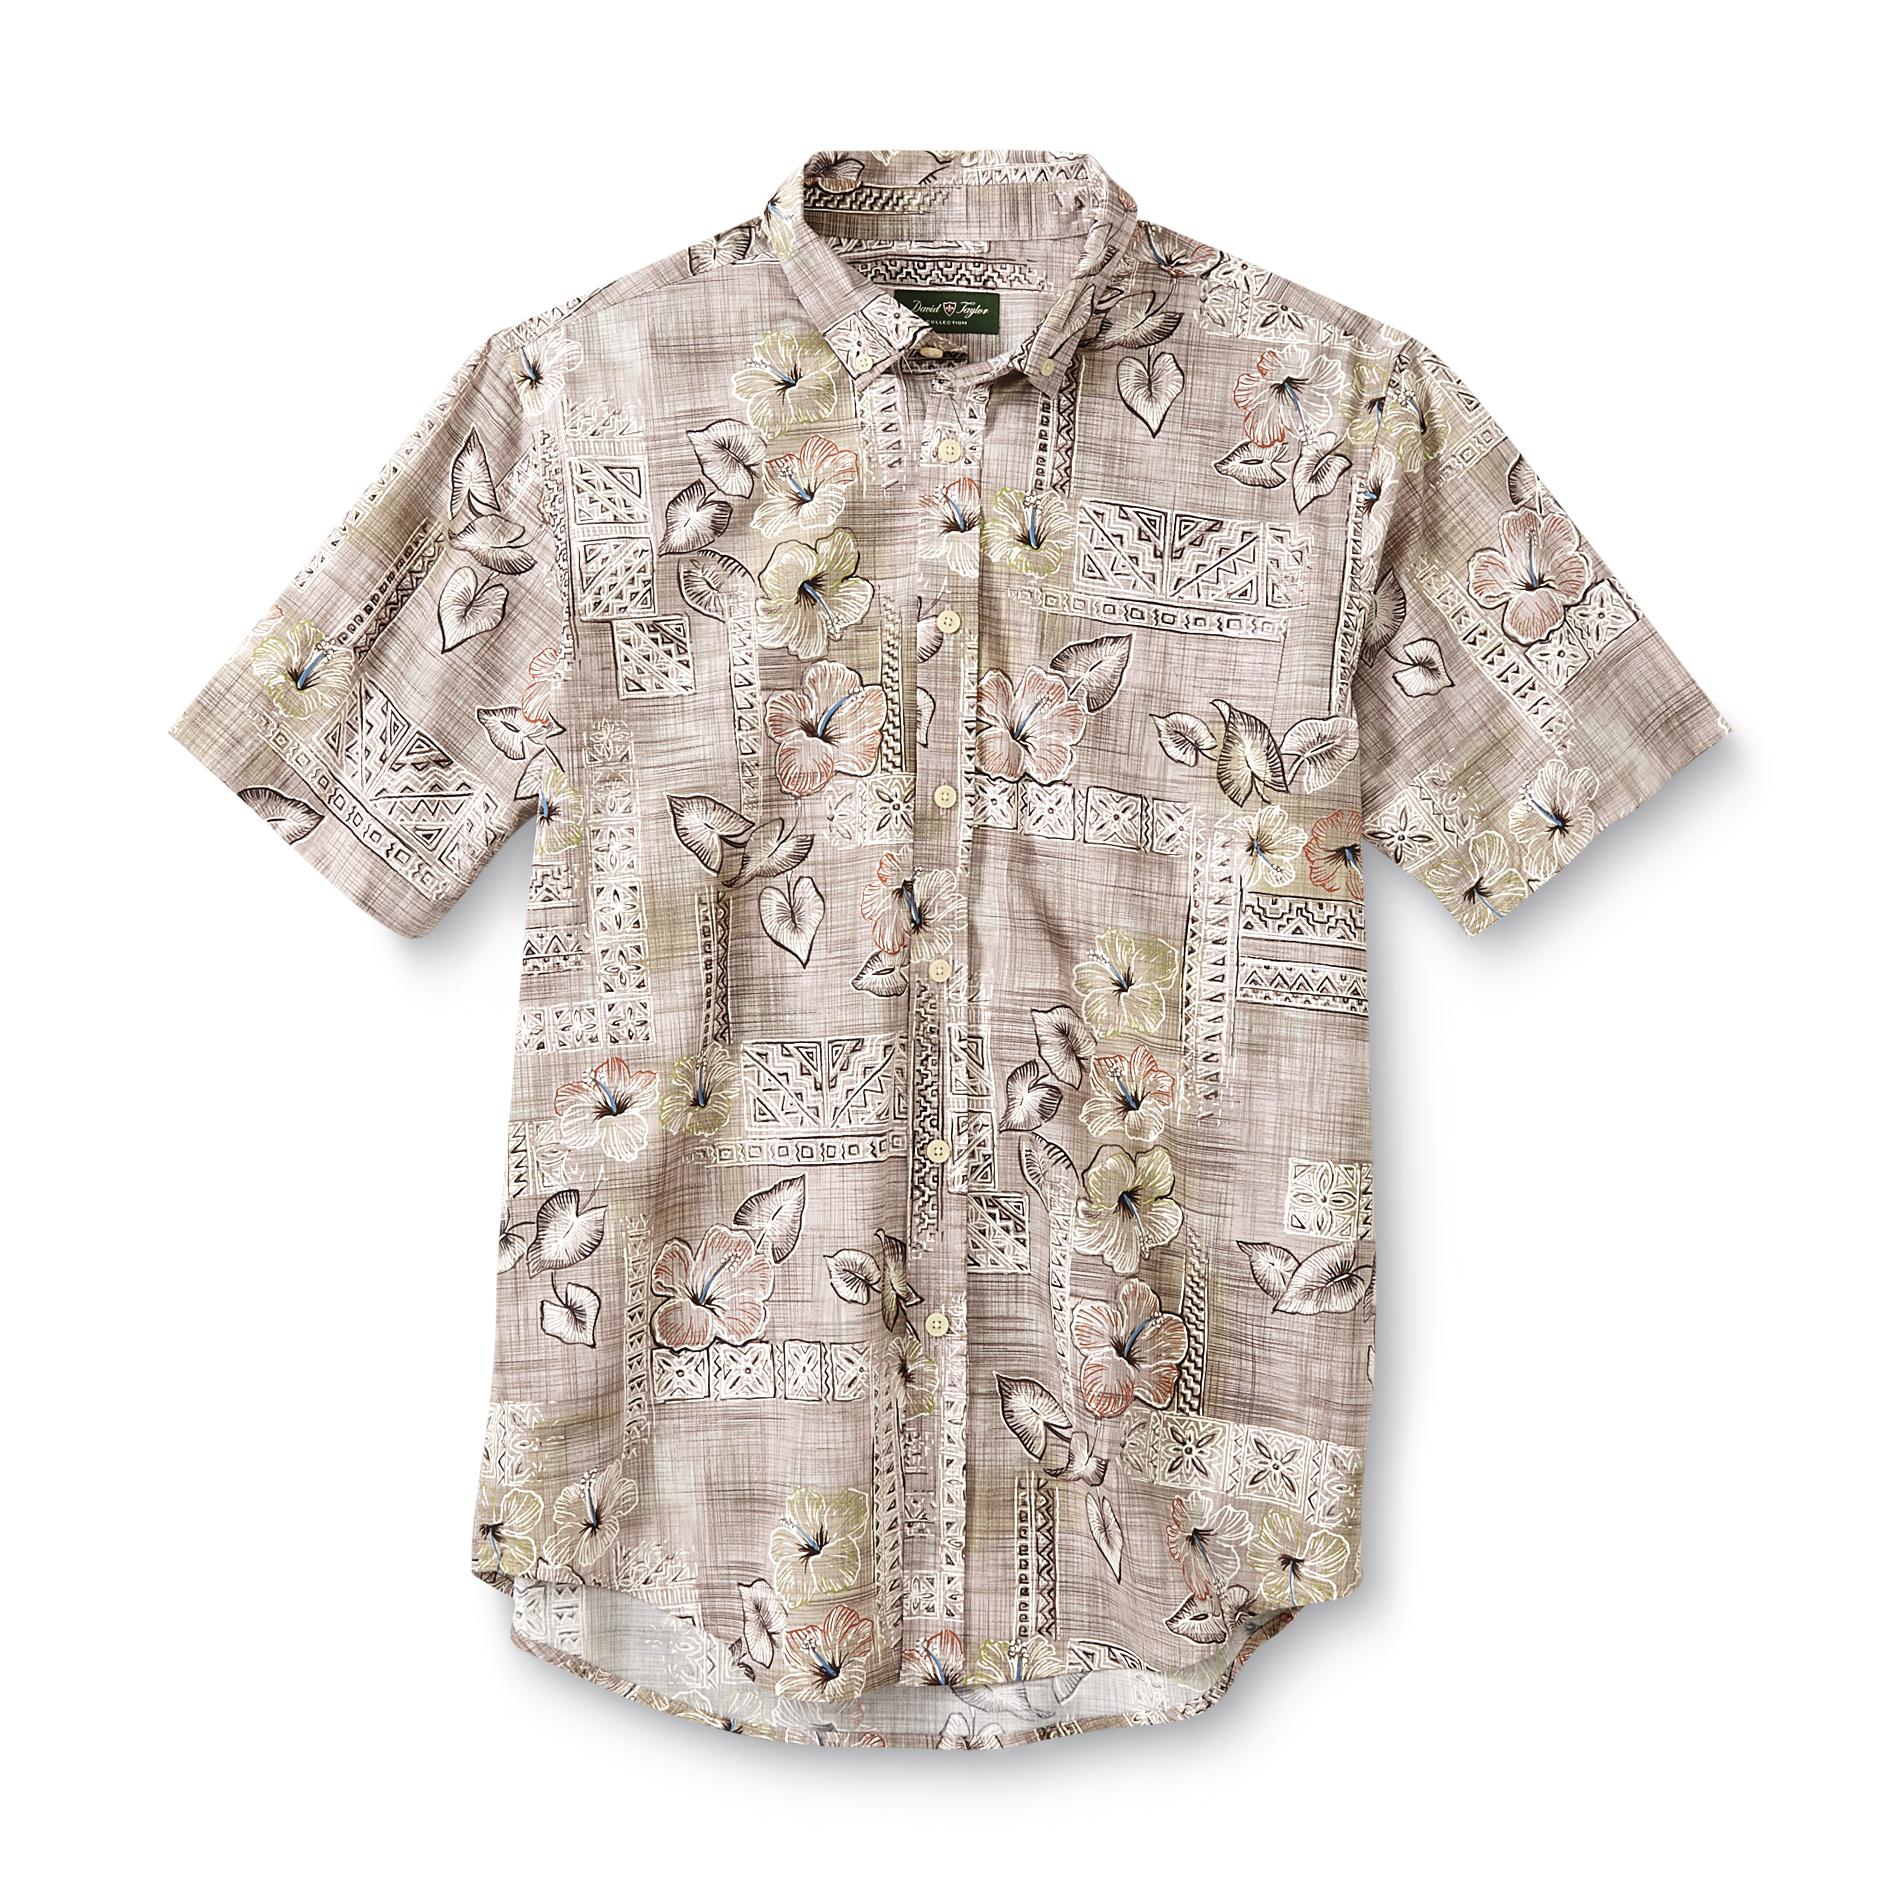 David Taylor Collection Men's Short-Sleeve Shirt - Tropical Print